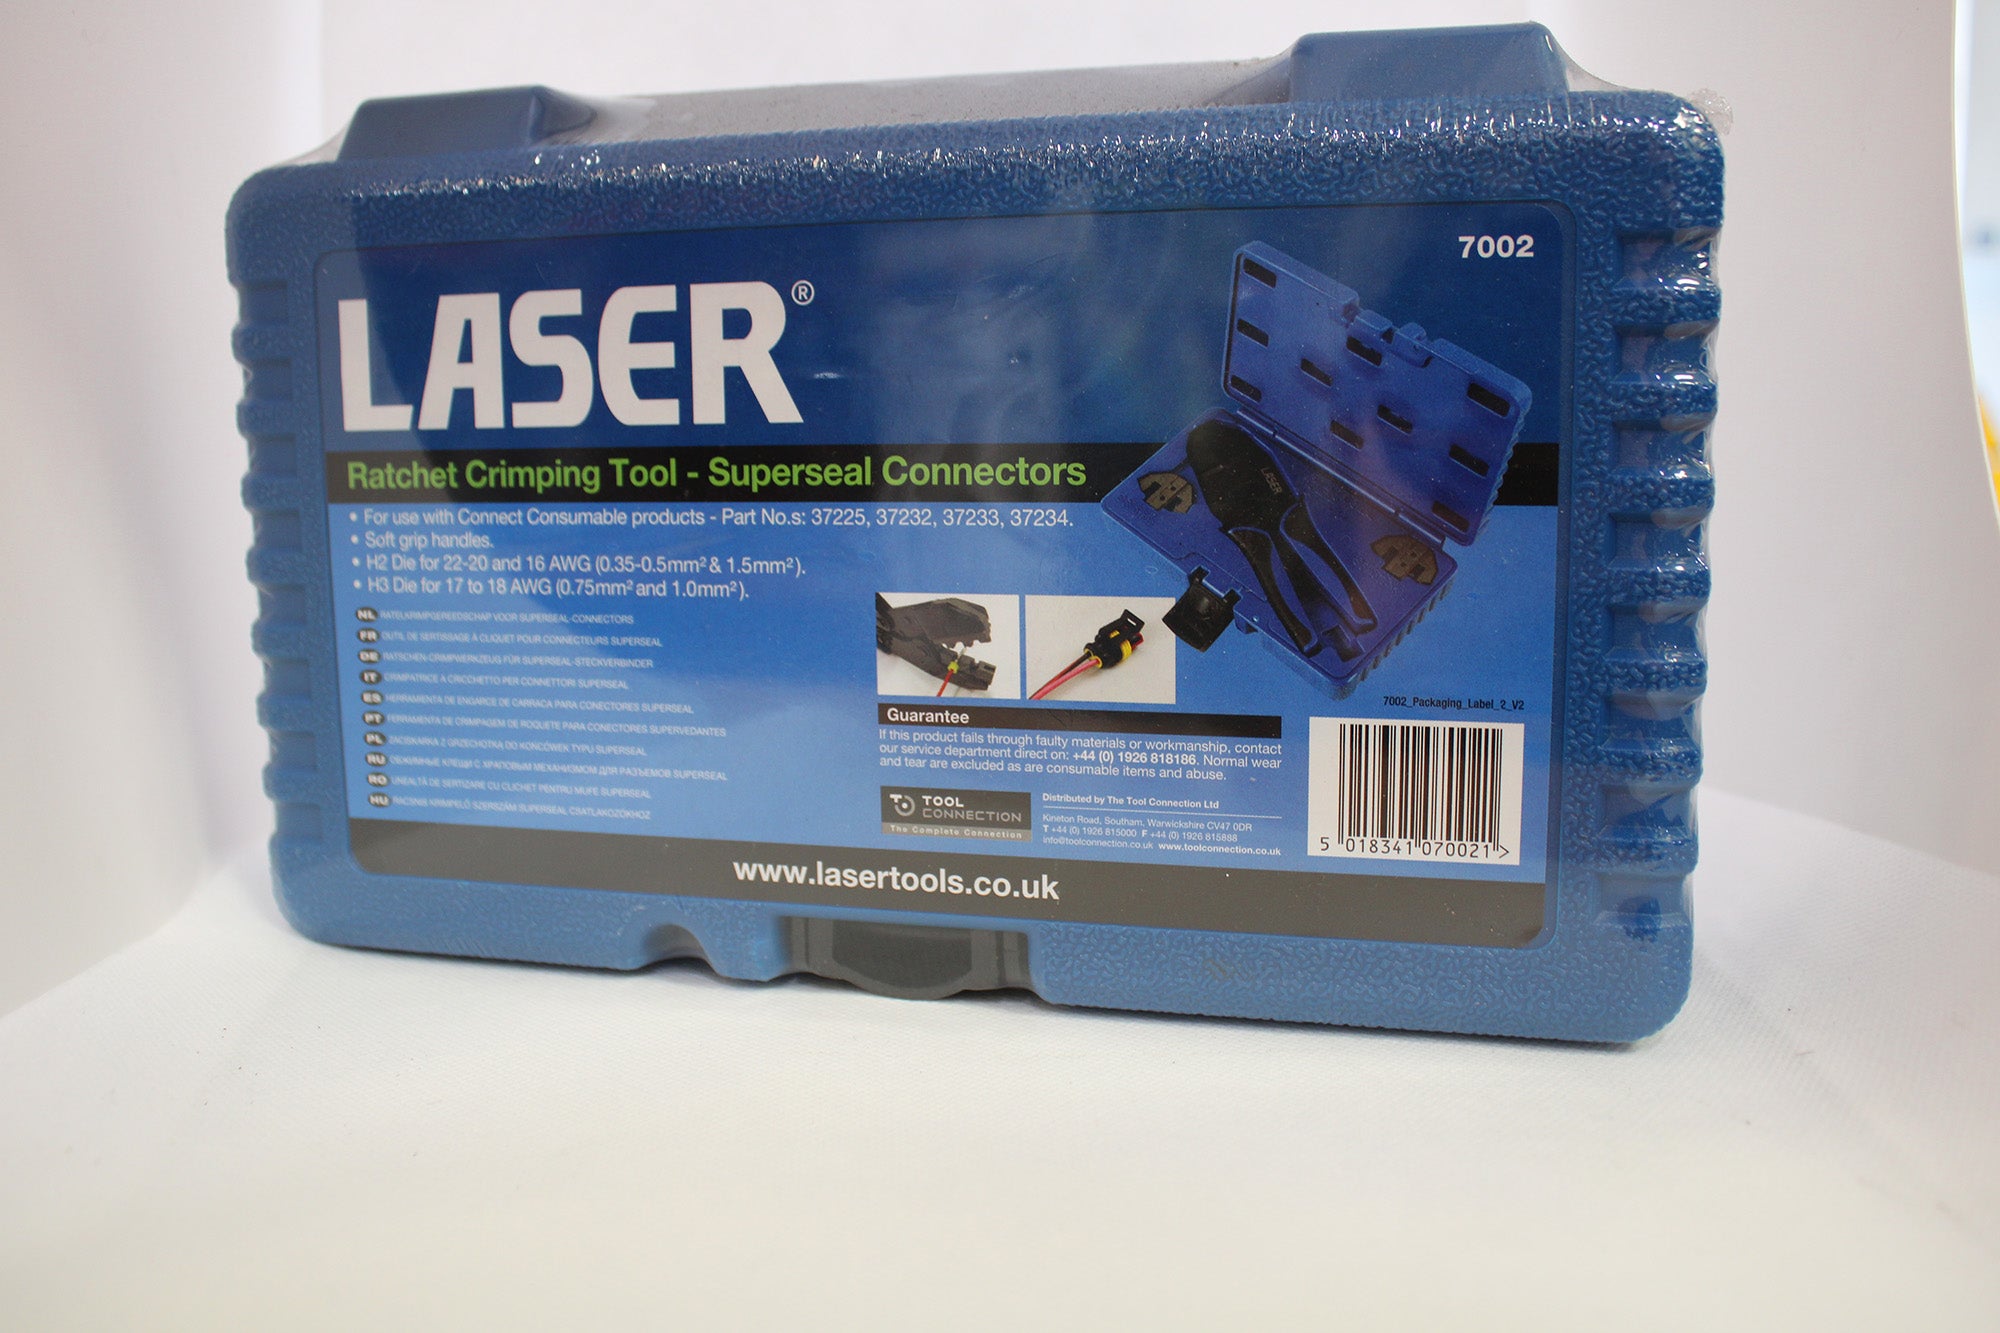 Laser ratchet crimping tool